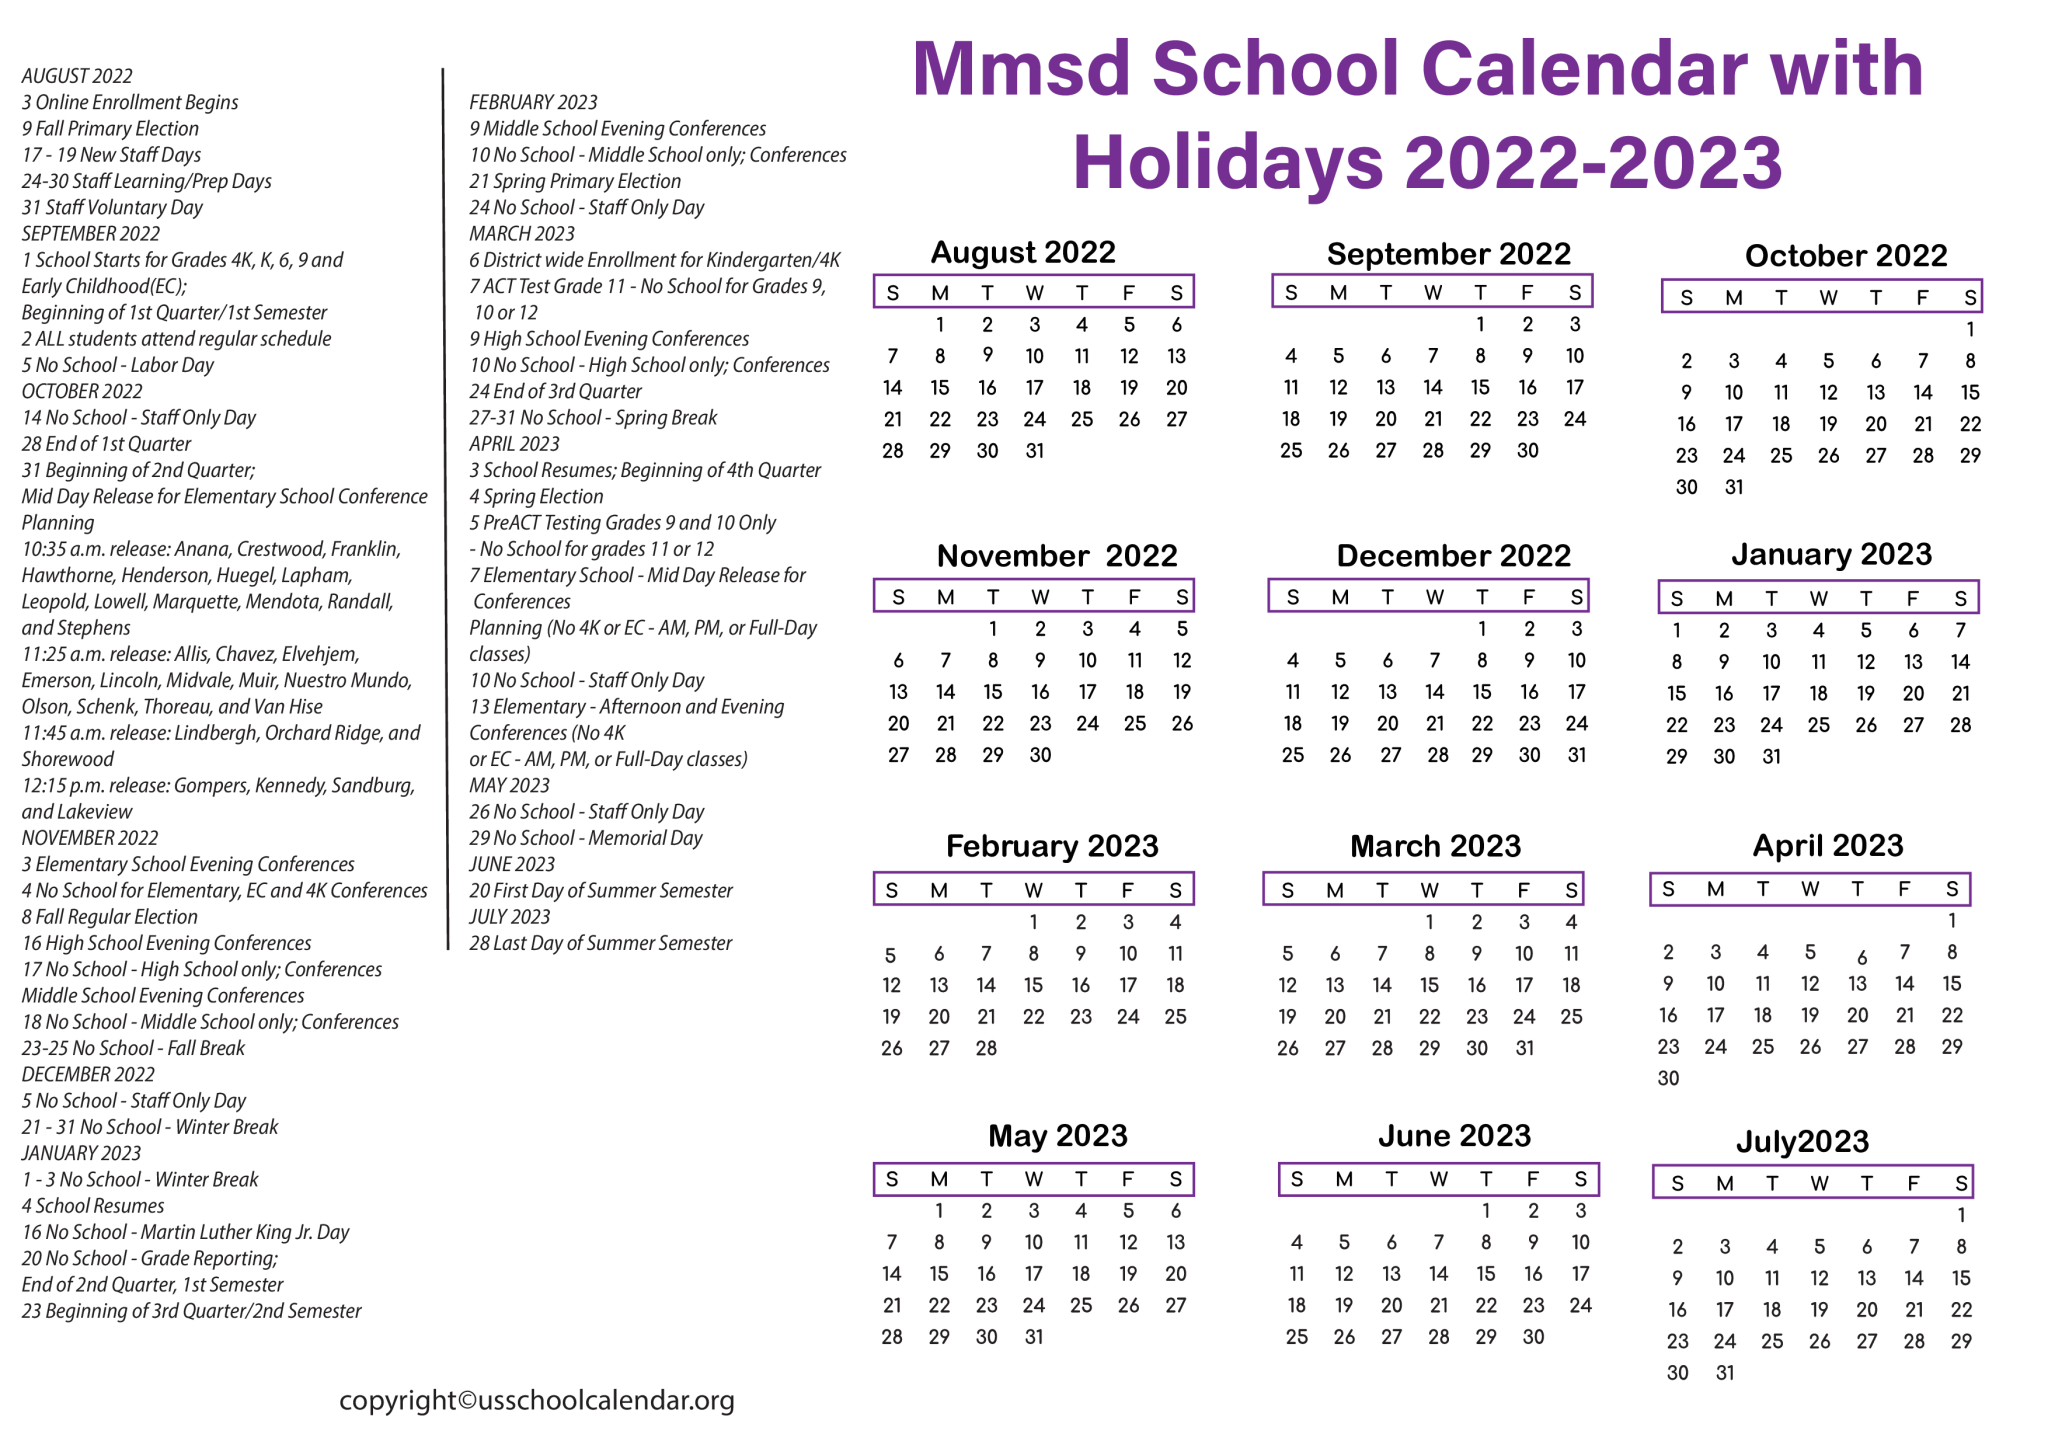 [Madison Metropolitan] MMSD School Calendar with Holidays 2023